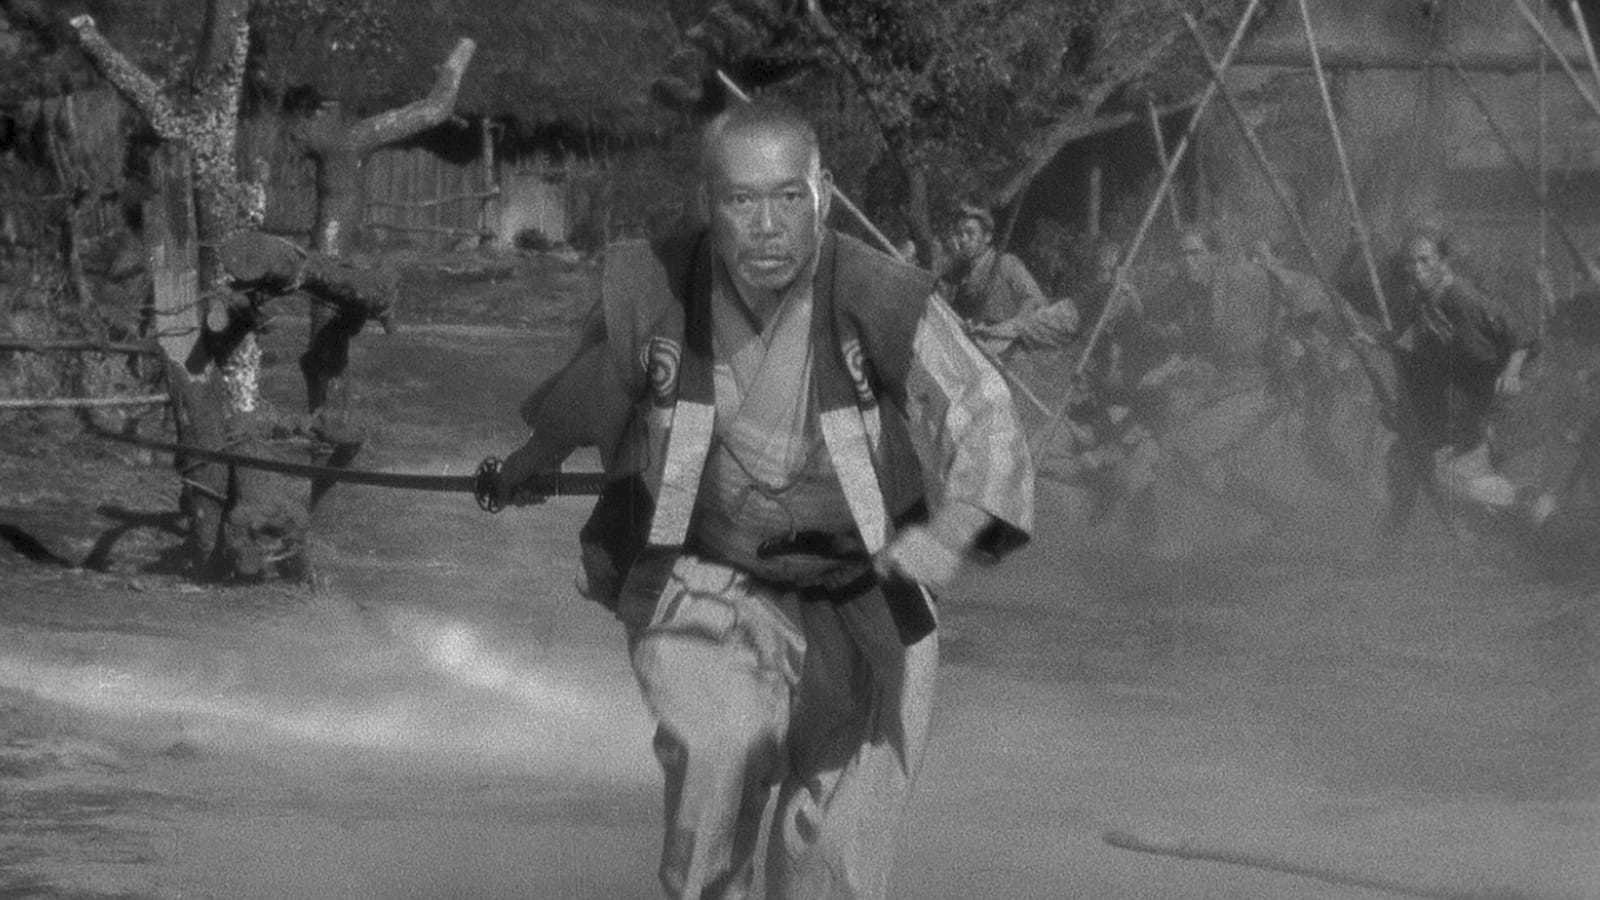 This image released by Janus Films shows Takashi Shimura in a scene from the 1954 film "Seven Samurai." (Janus Films via AP)